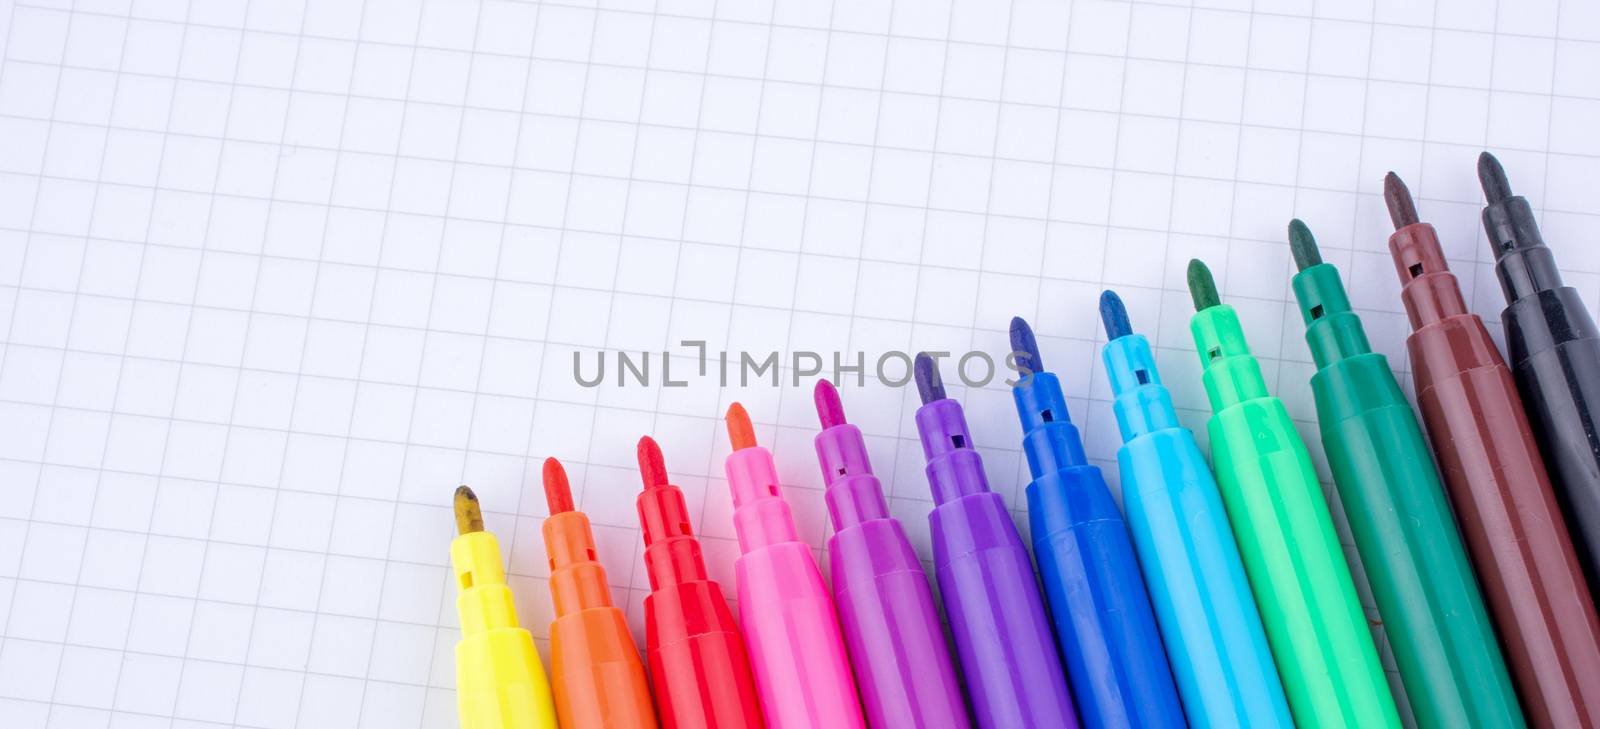 Felt-tip pens on a notebook by berkay